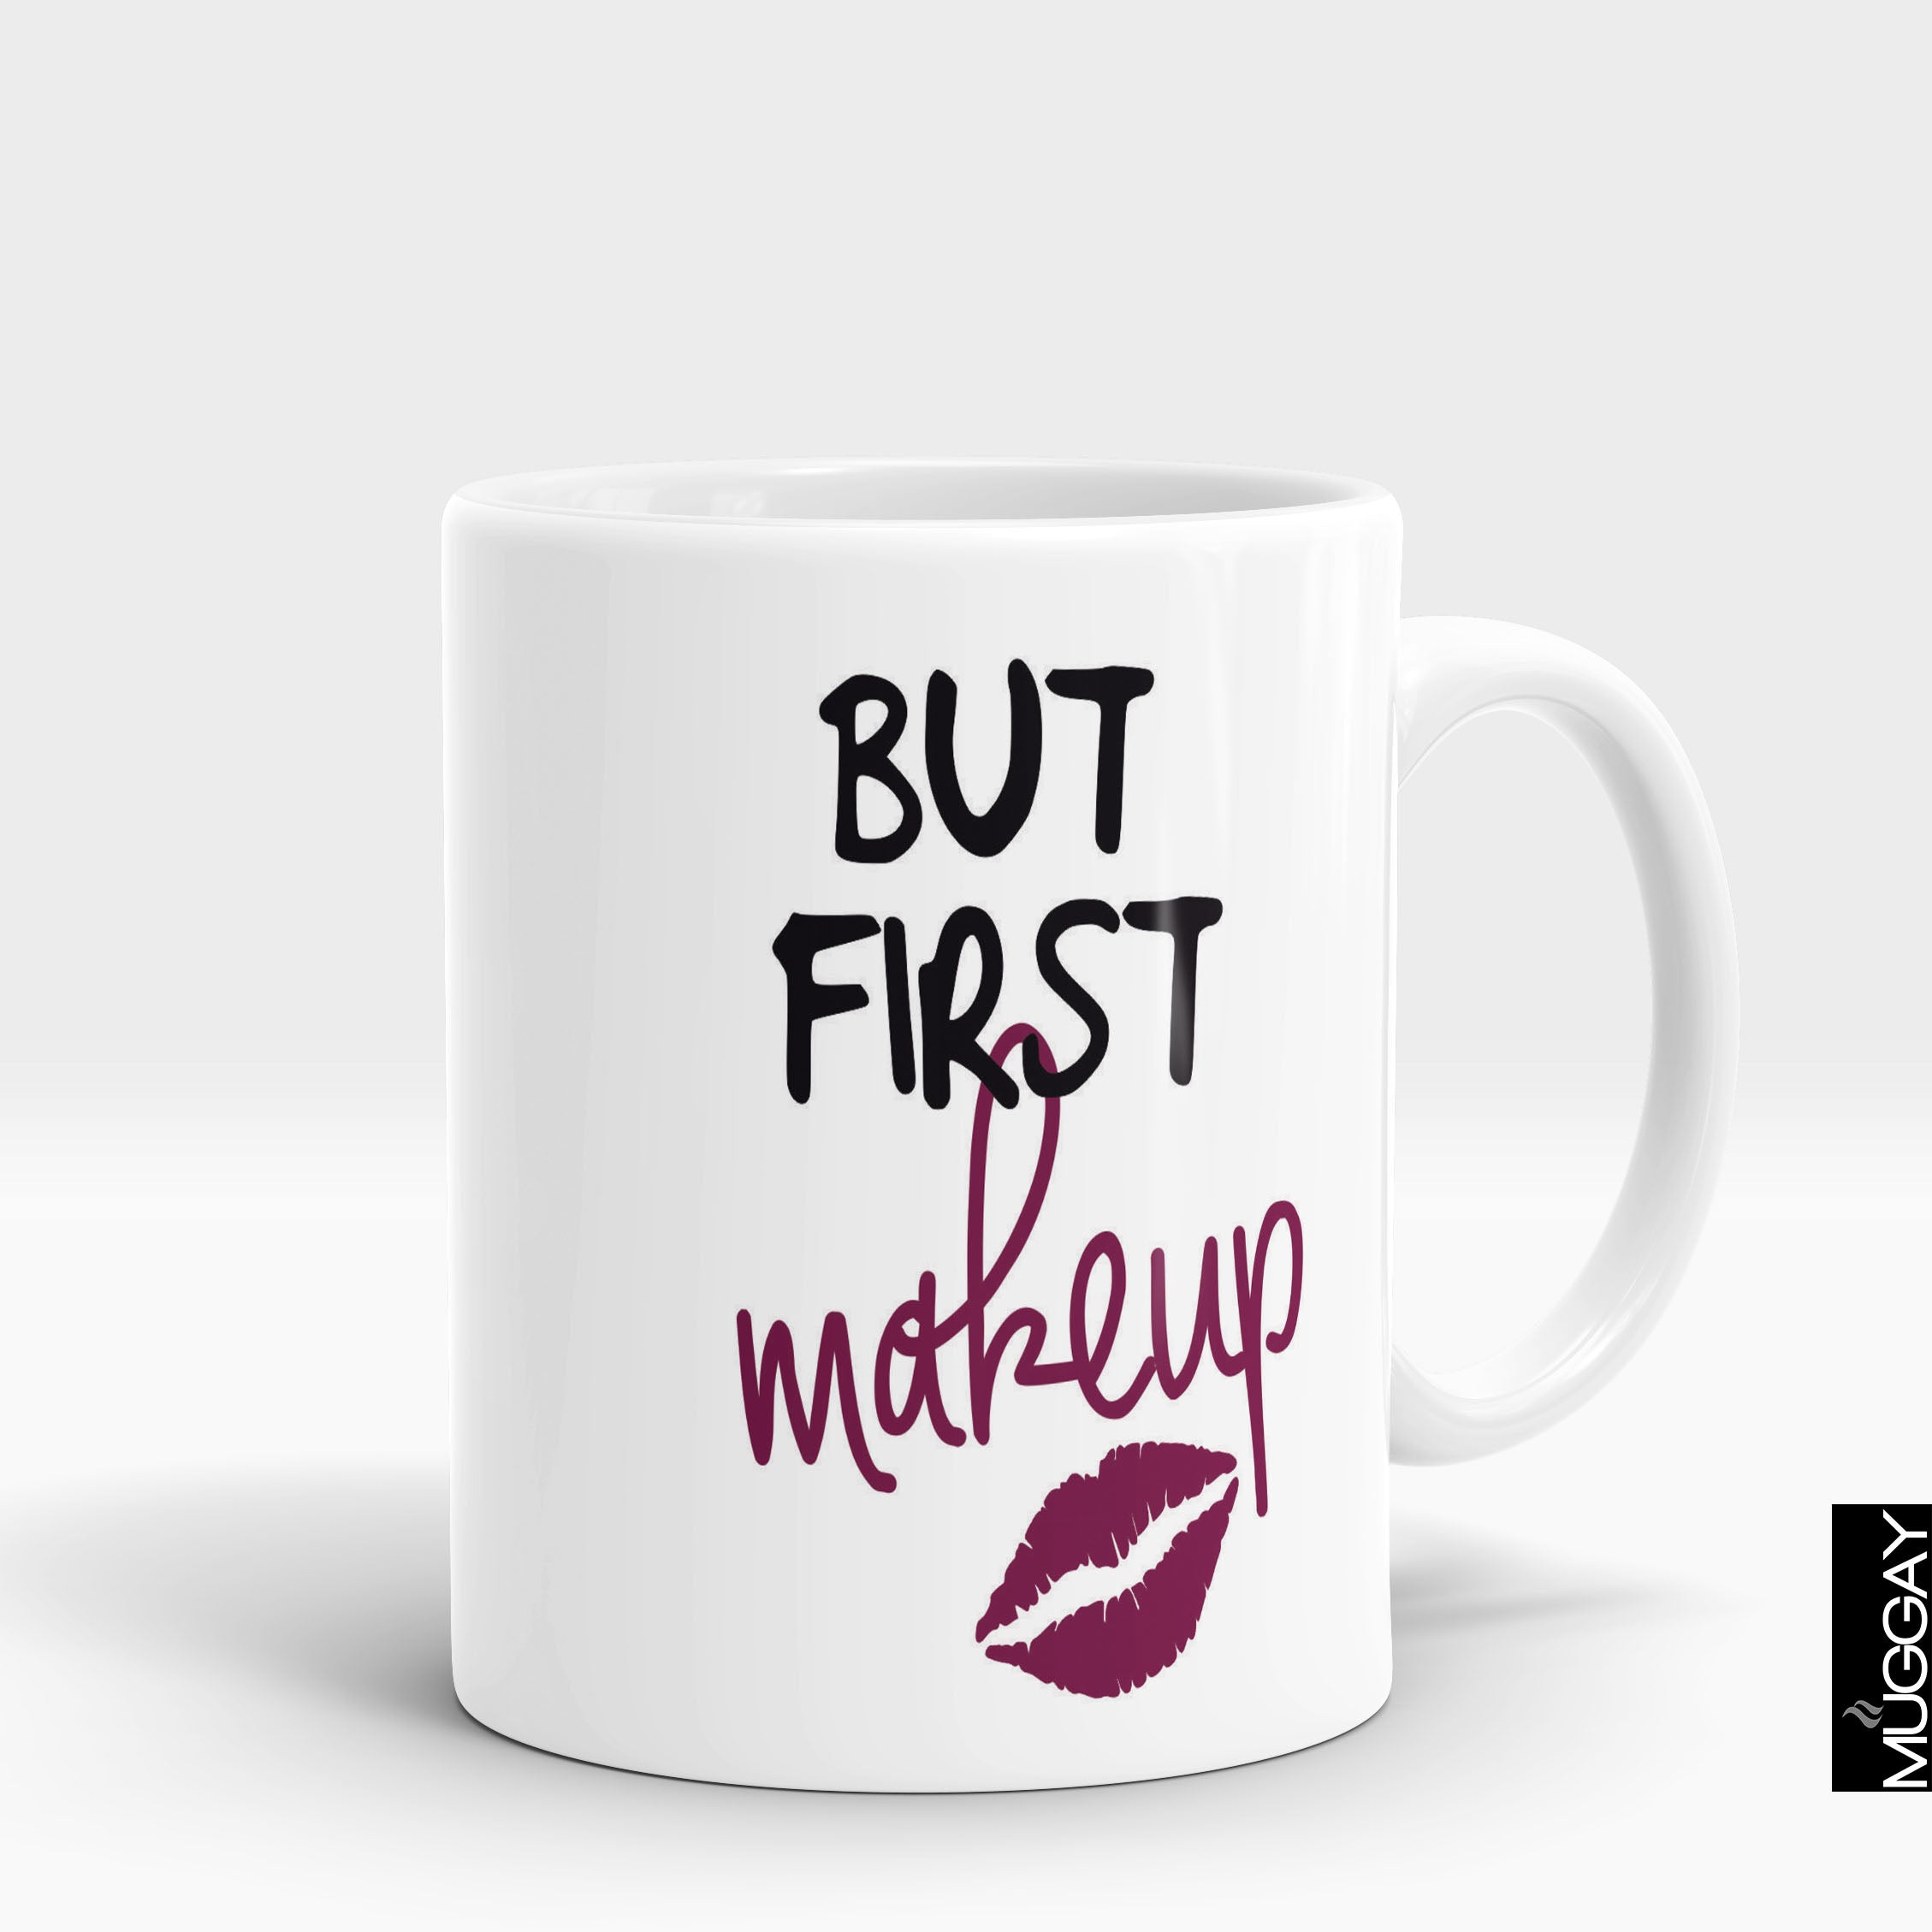 Makeup theme mugs -4